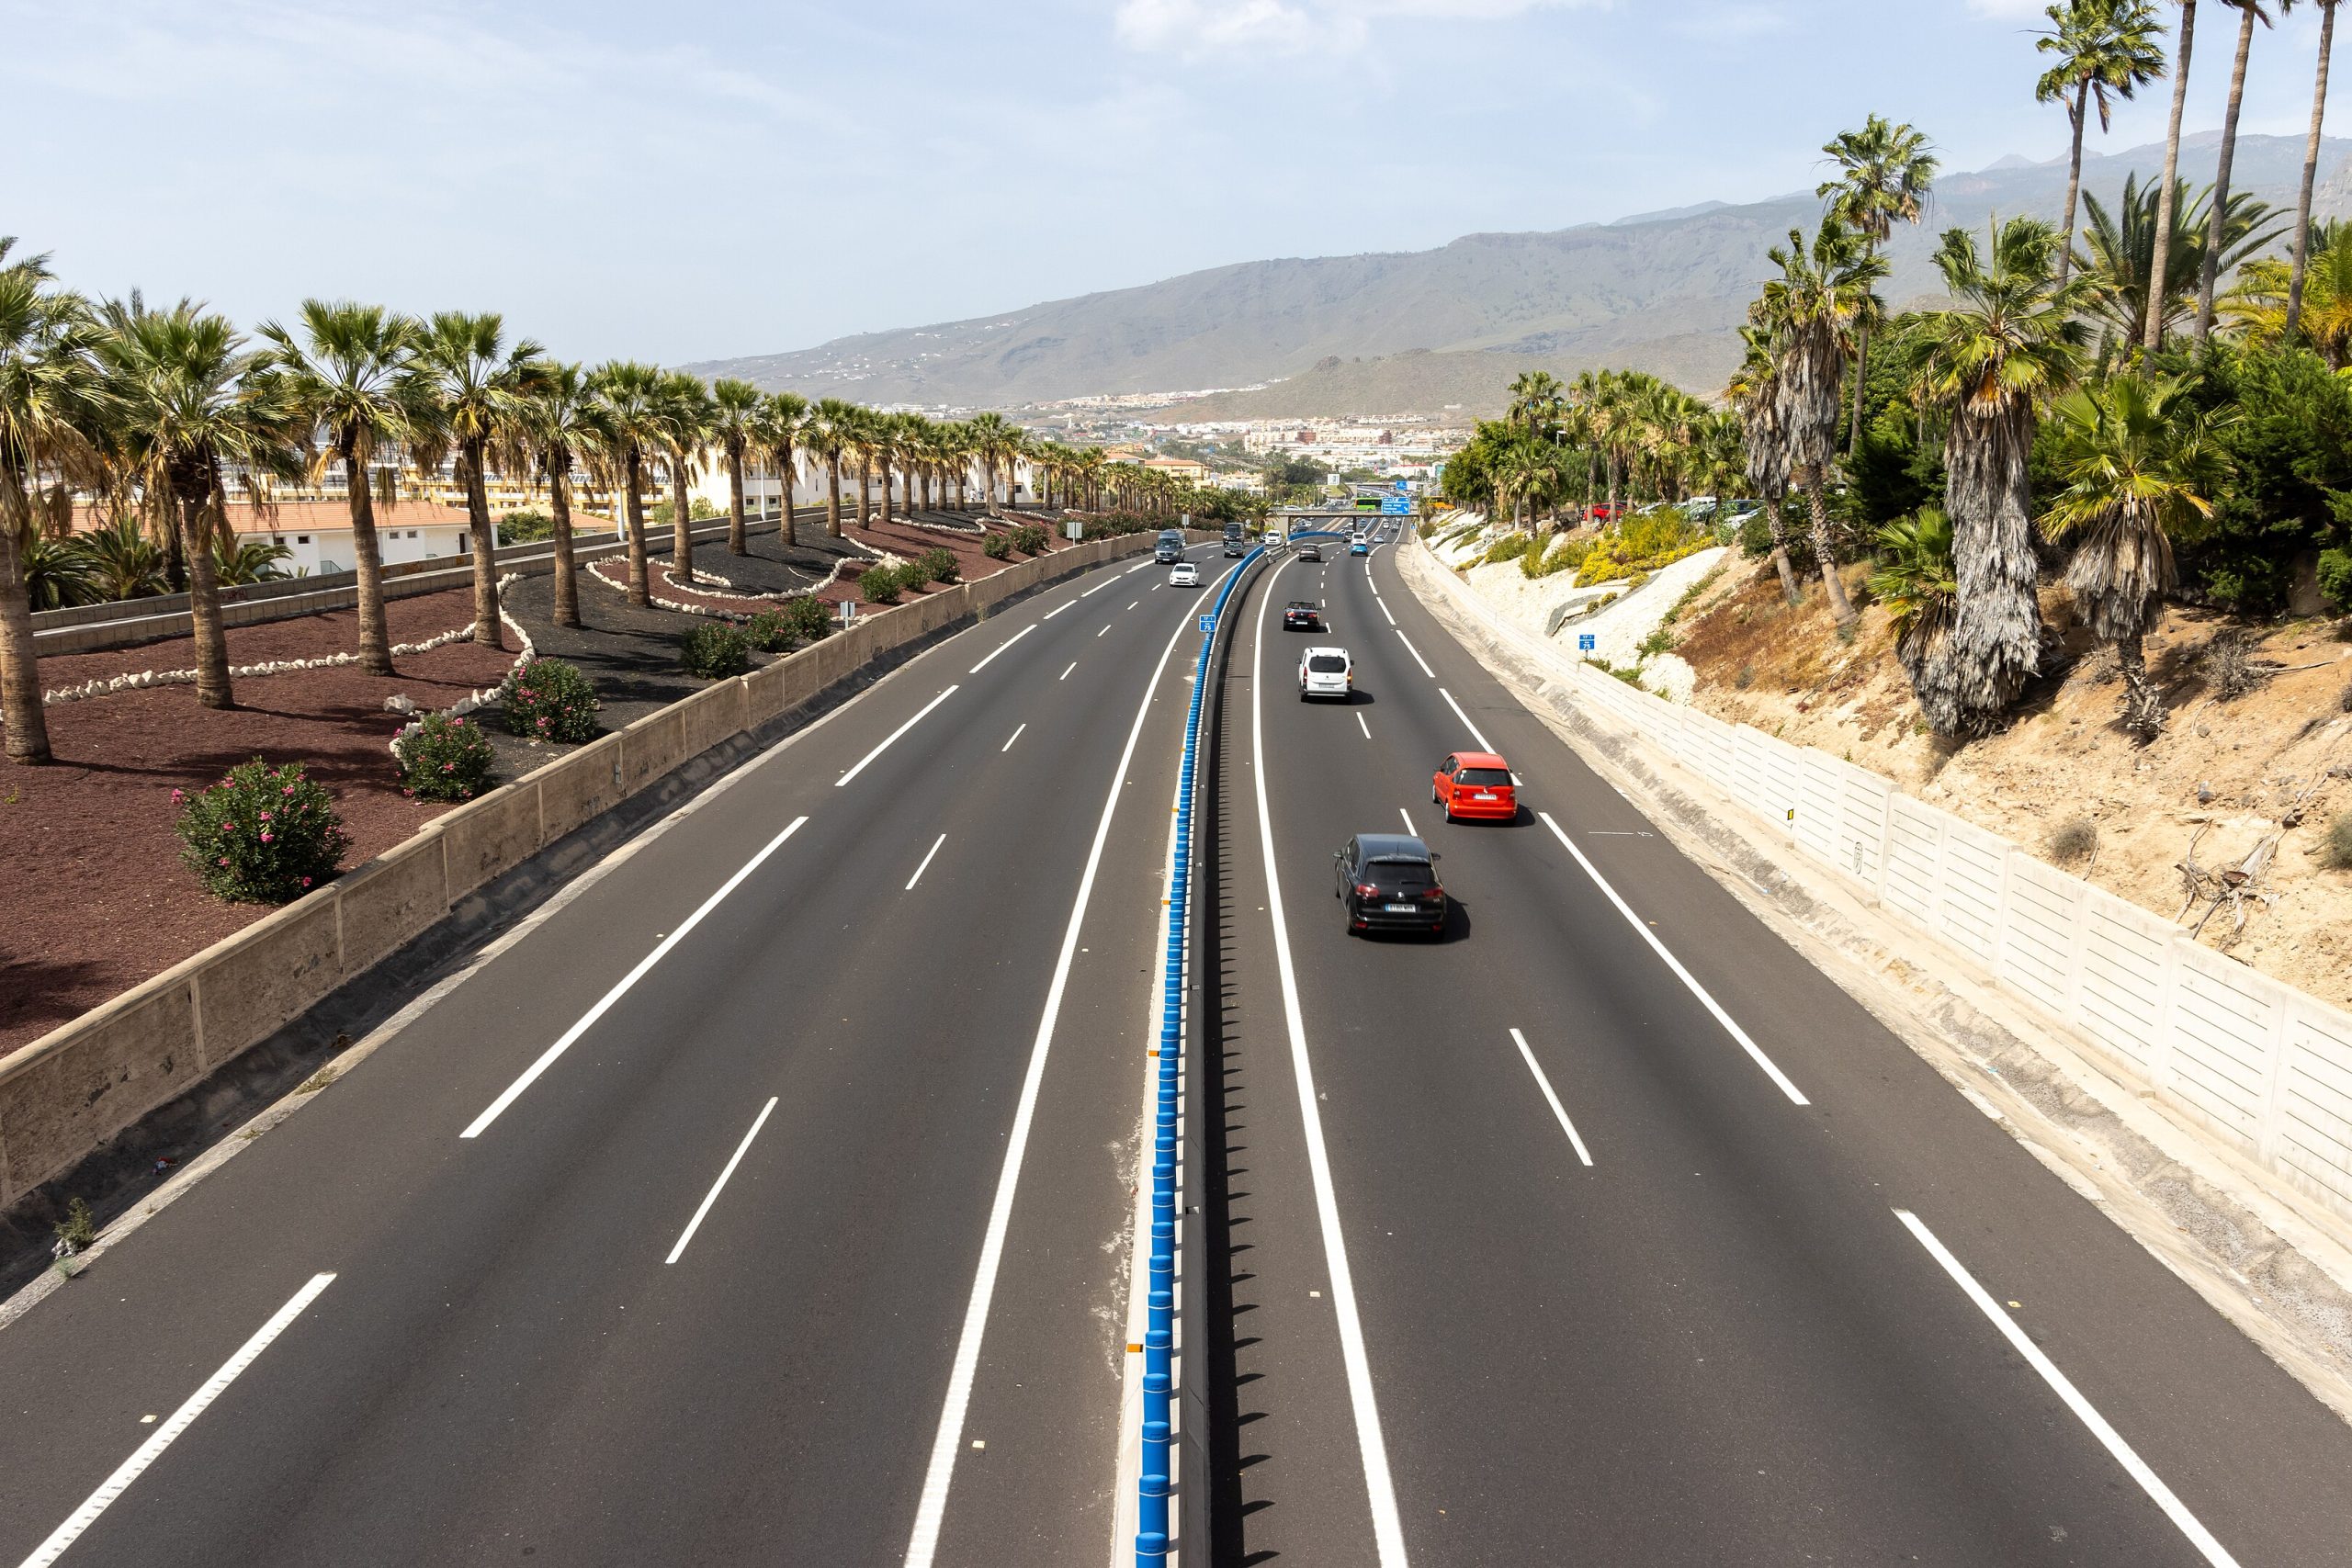 The TF-1 motorway in Tenerife